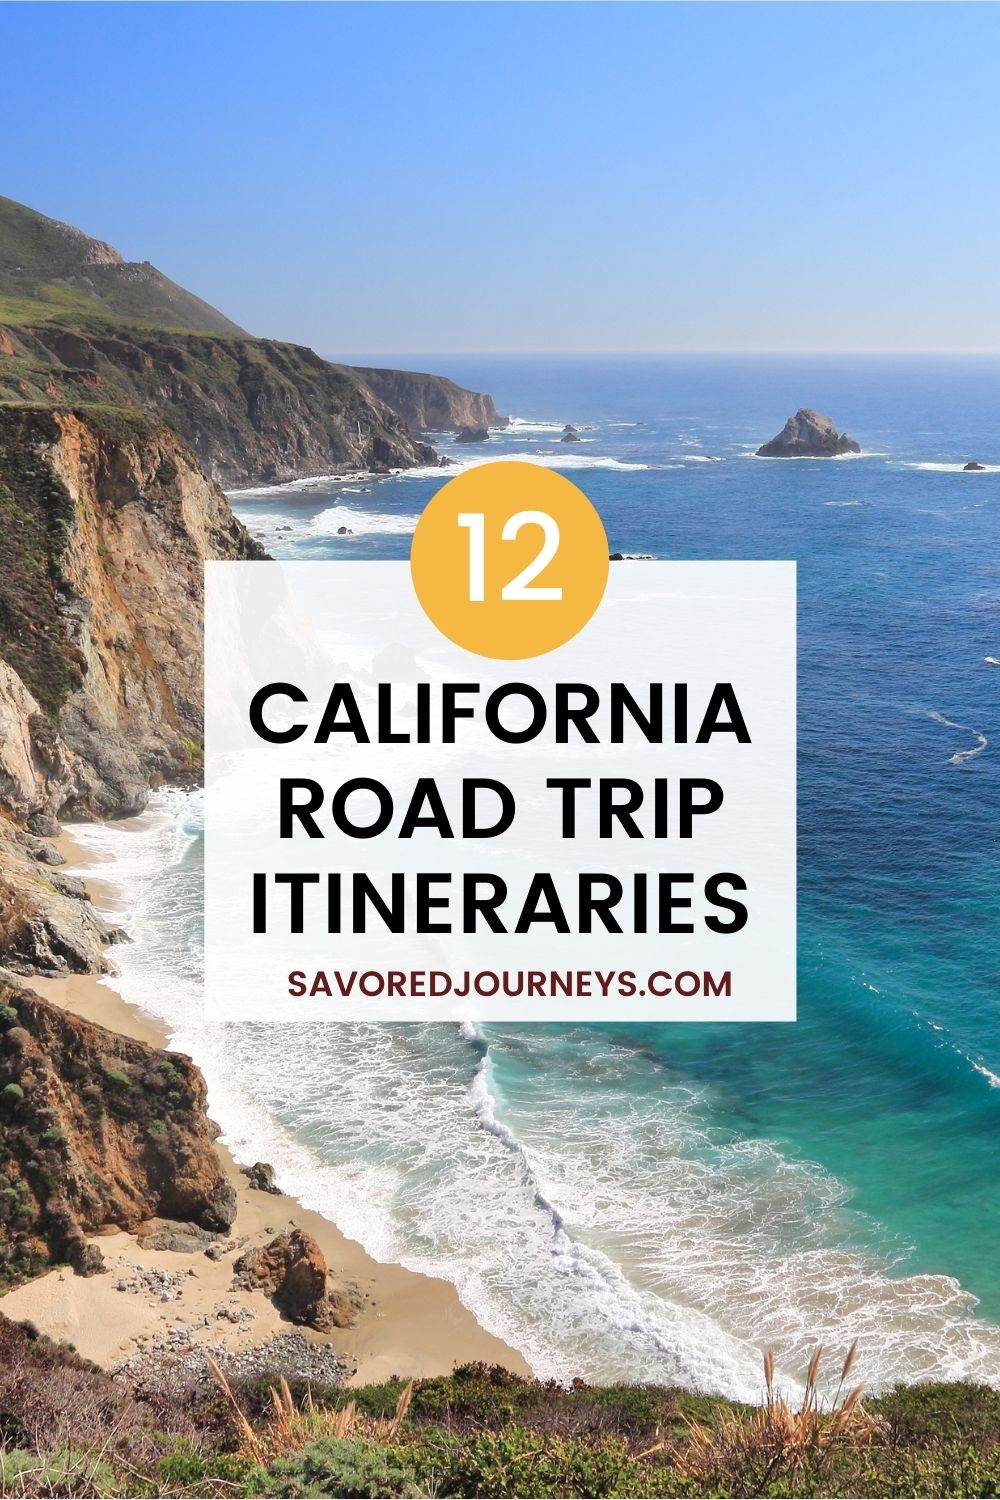 California Road Trip Itineraries